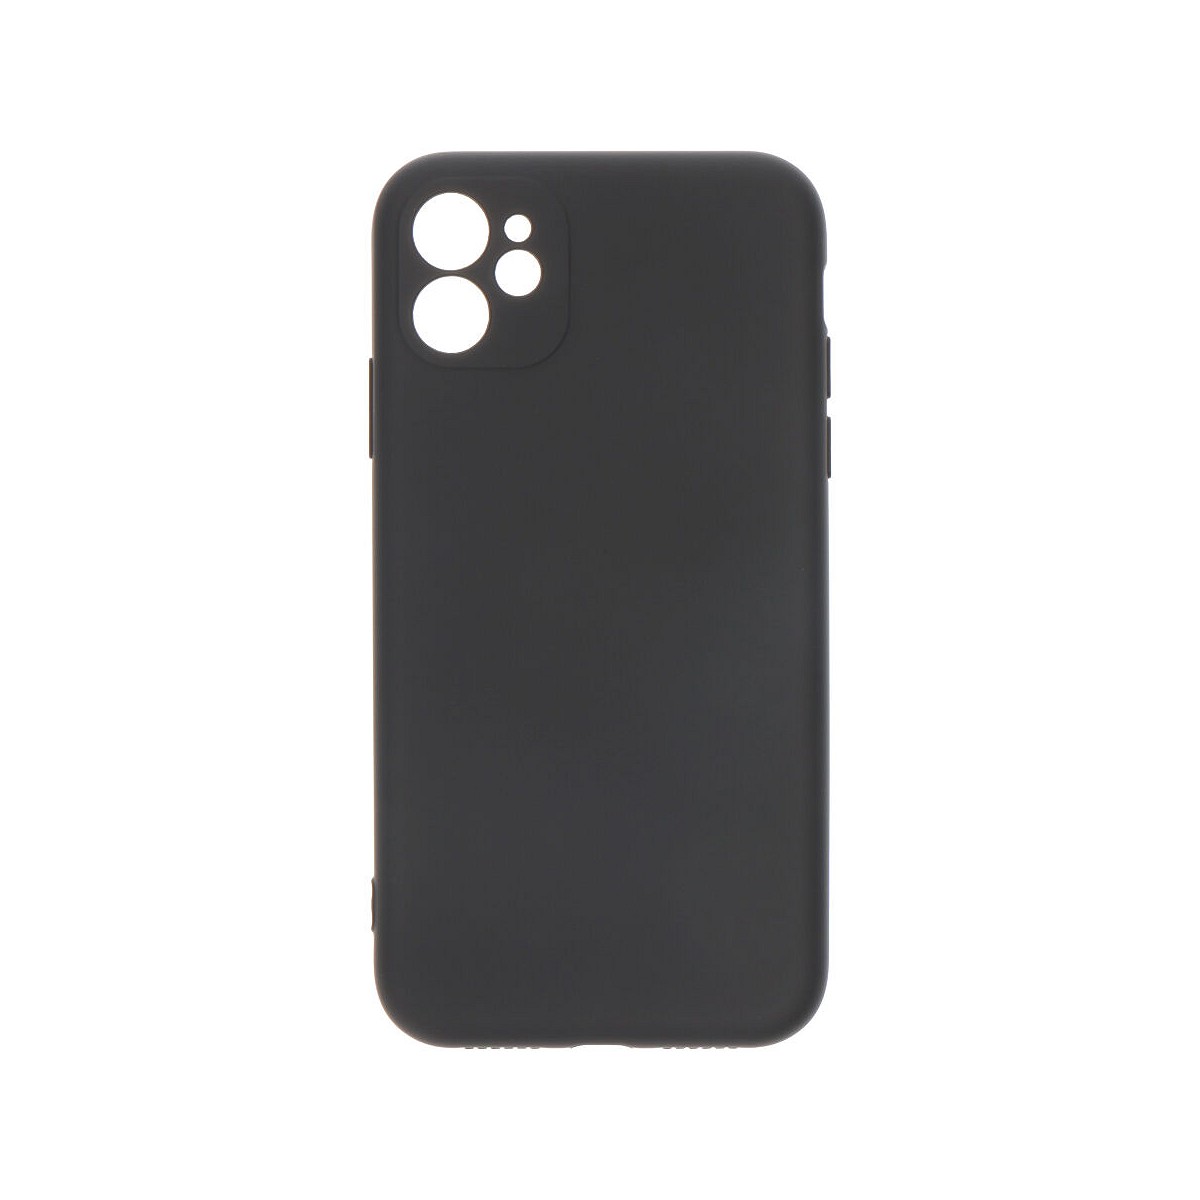 Carcasa negra de plástico soft touch para iphone 11